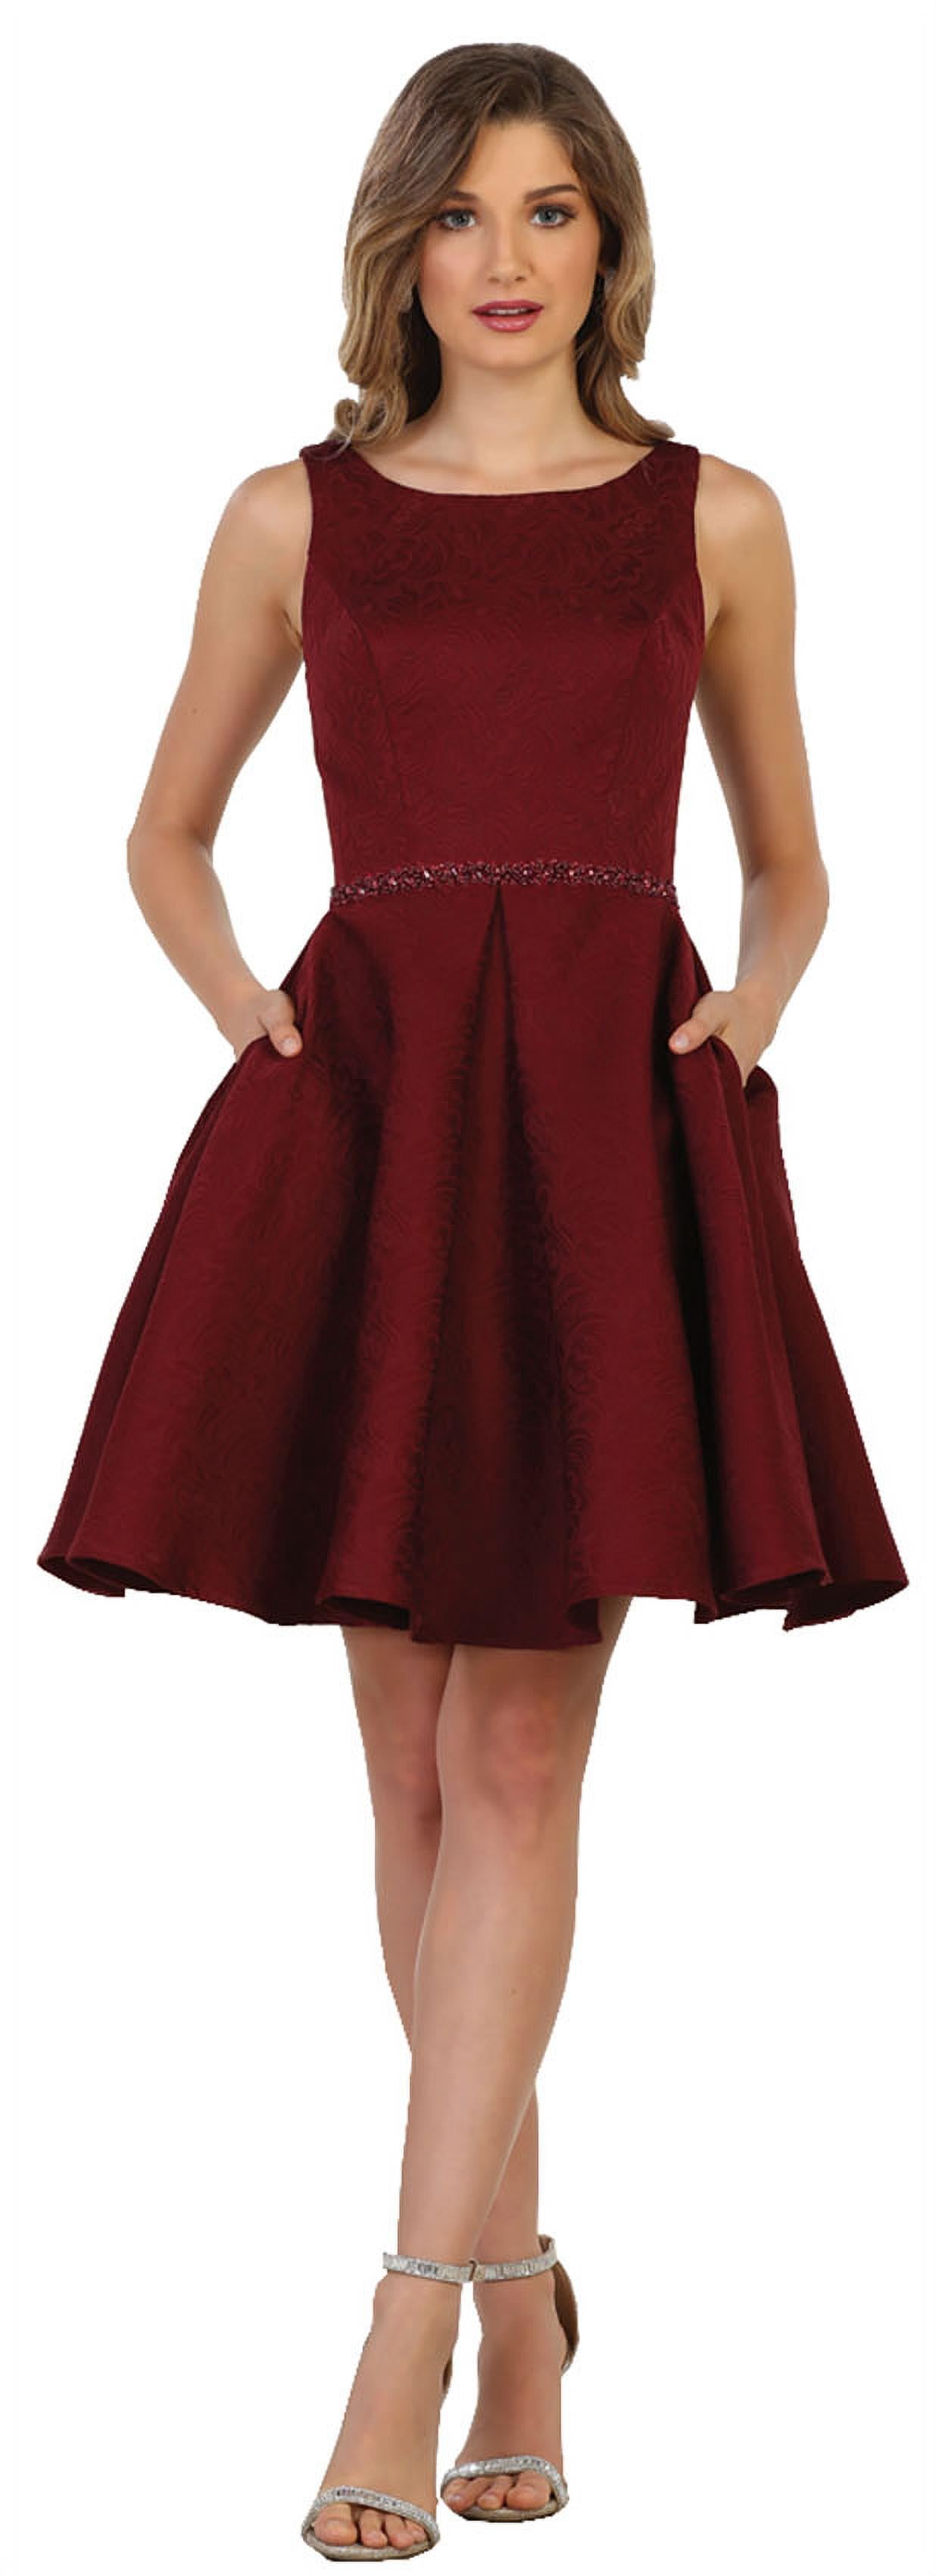 Formal Dress Shops Inc FDS1646 Semi Formal Dance Classy Short Dress 